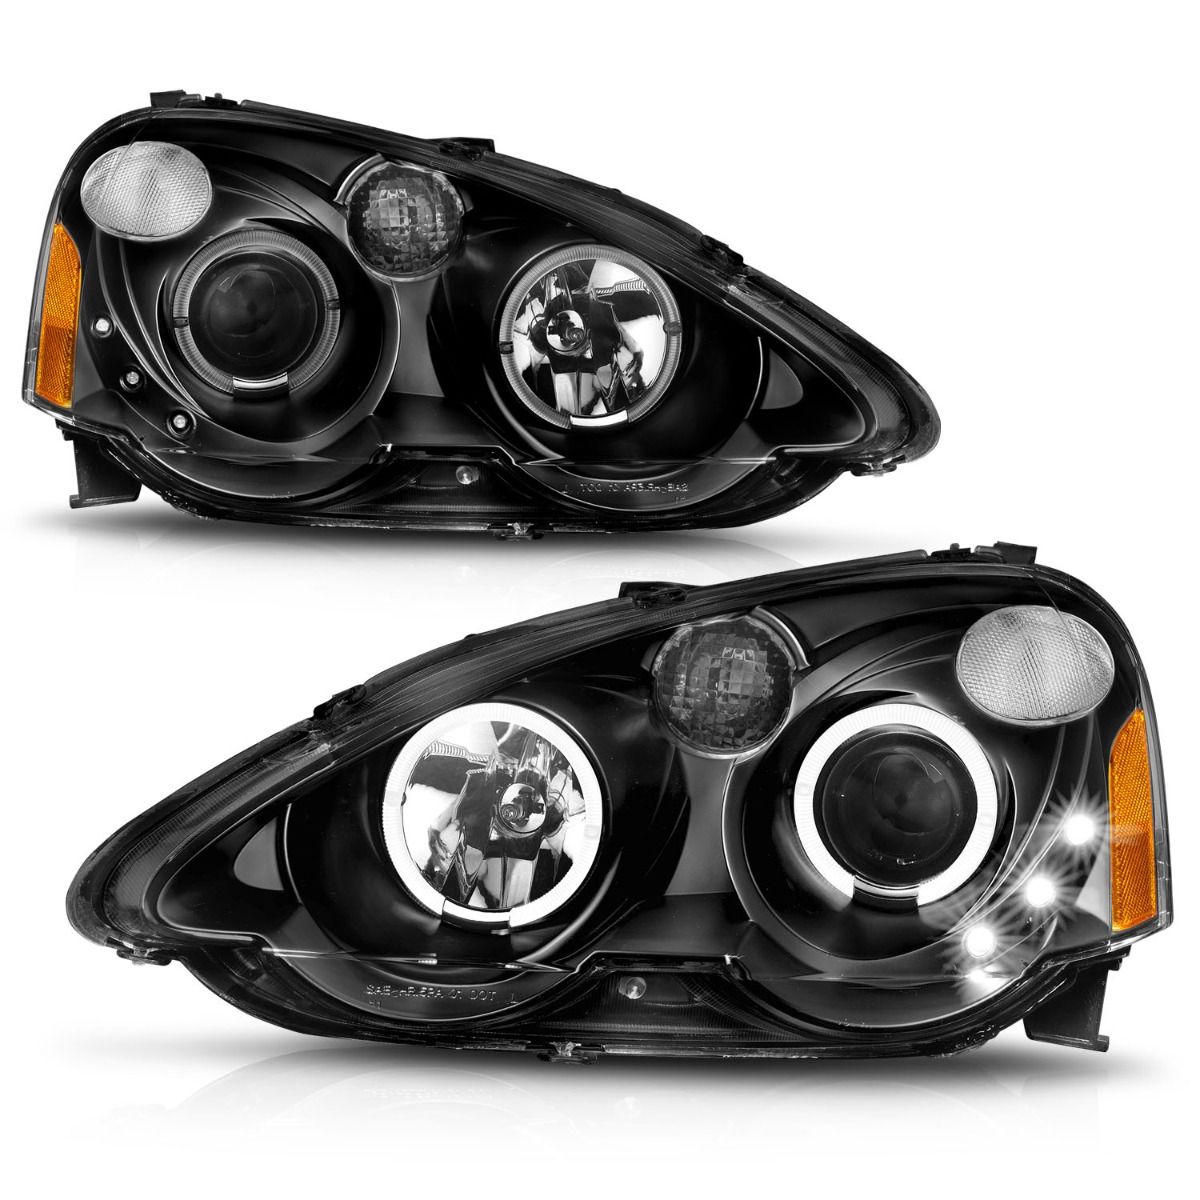 Acura Projector Headlights, Acura Rsx Headlights, Rsx 02-04 Headlights, Black Projector Headlights, Anzo Projector Headlights